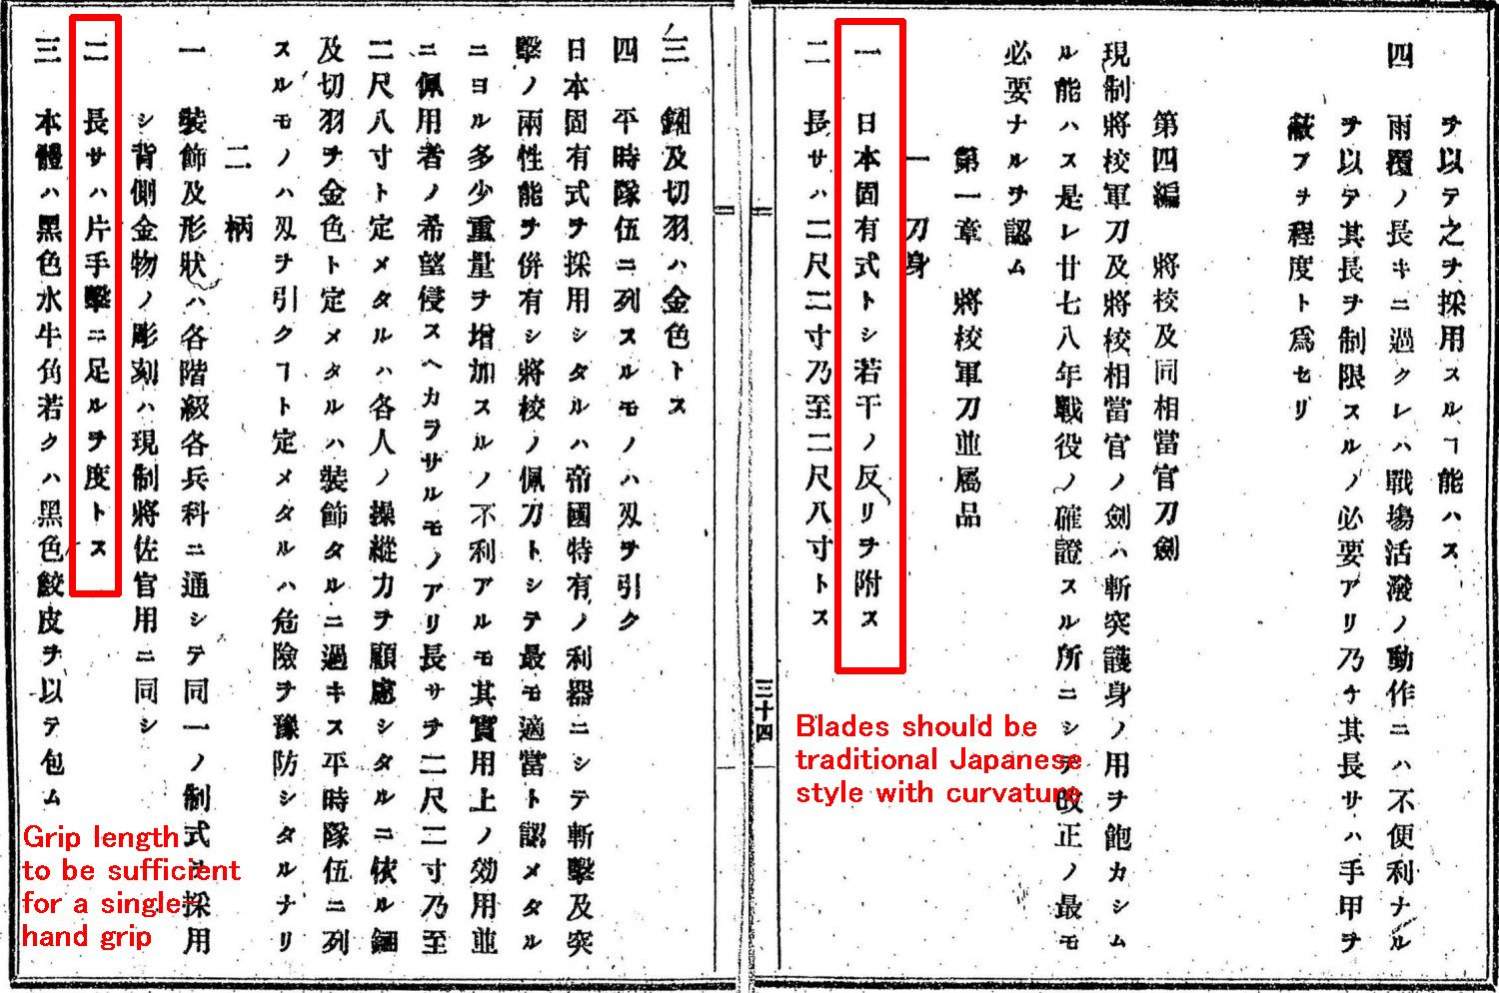 1430320d1596011805-why-did-army-revive-samurai-sword-design-1934-officers-swords-1.jpg